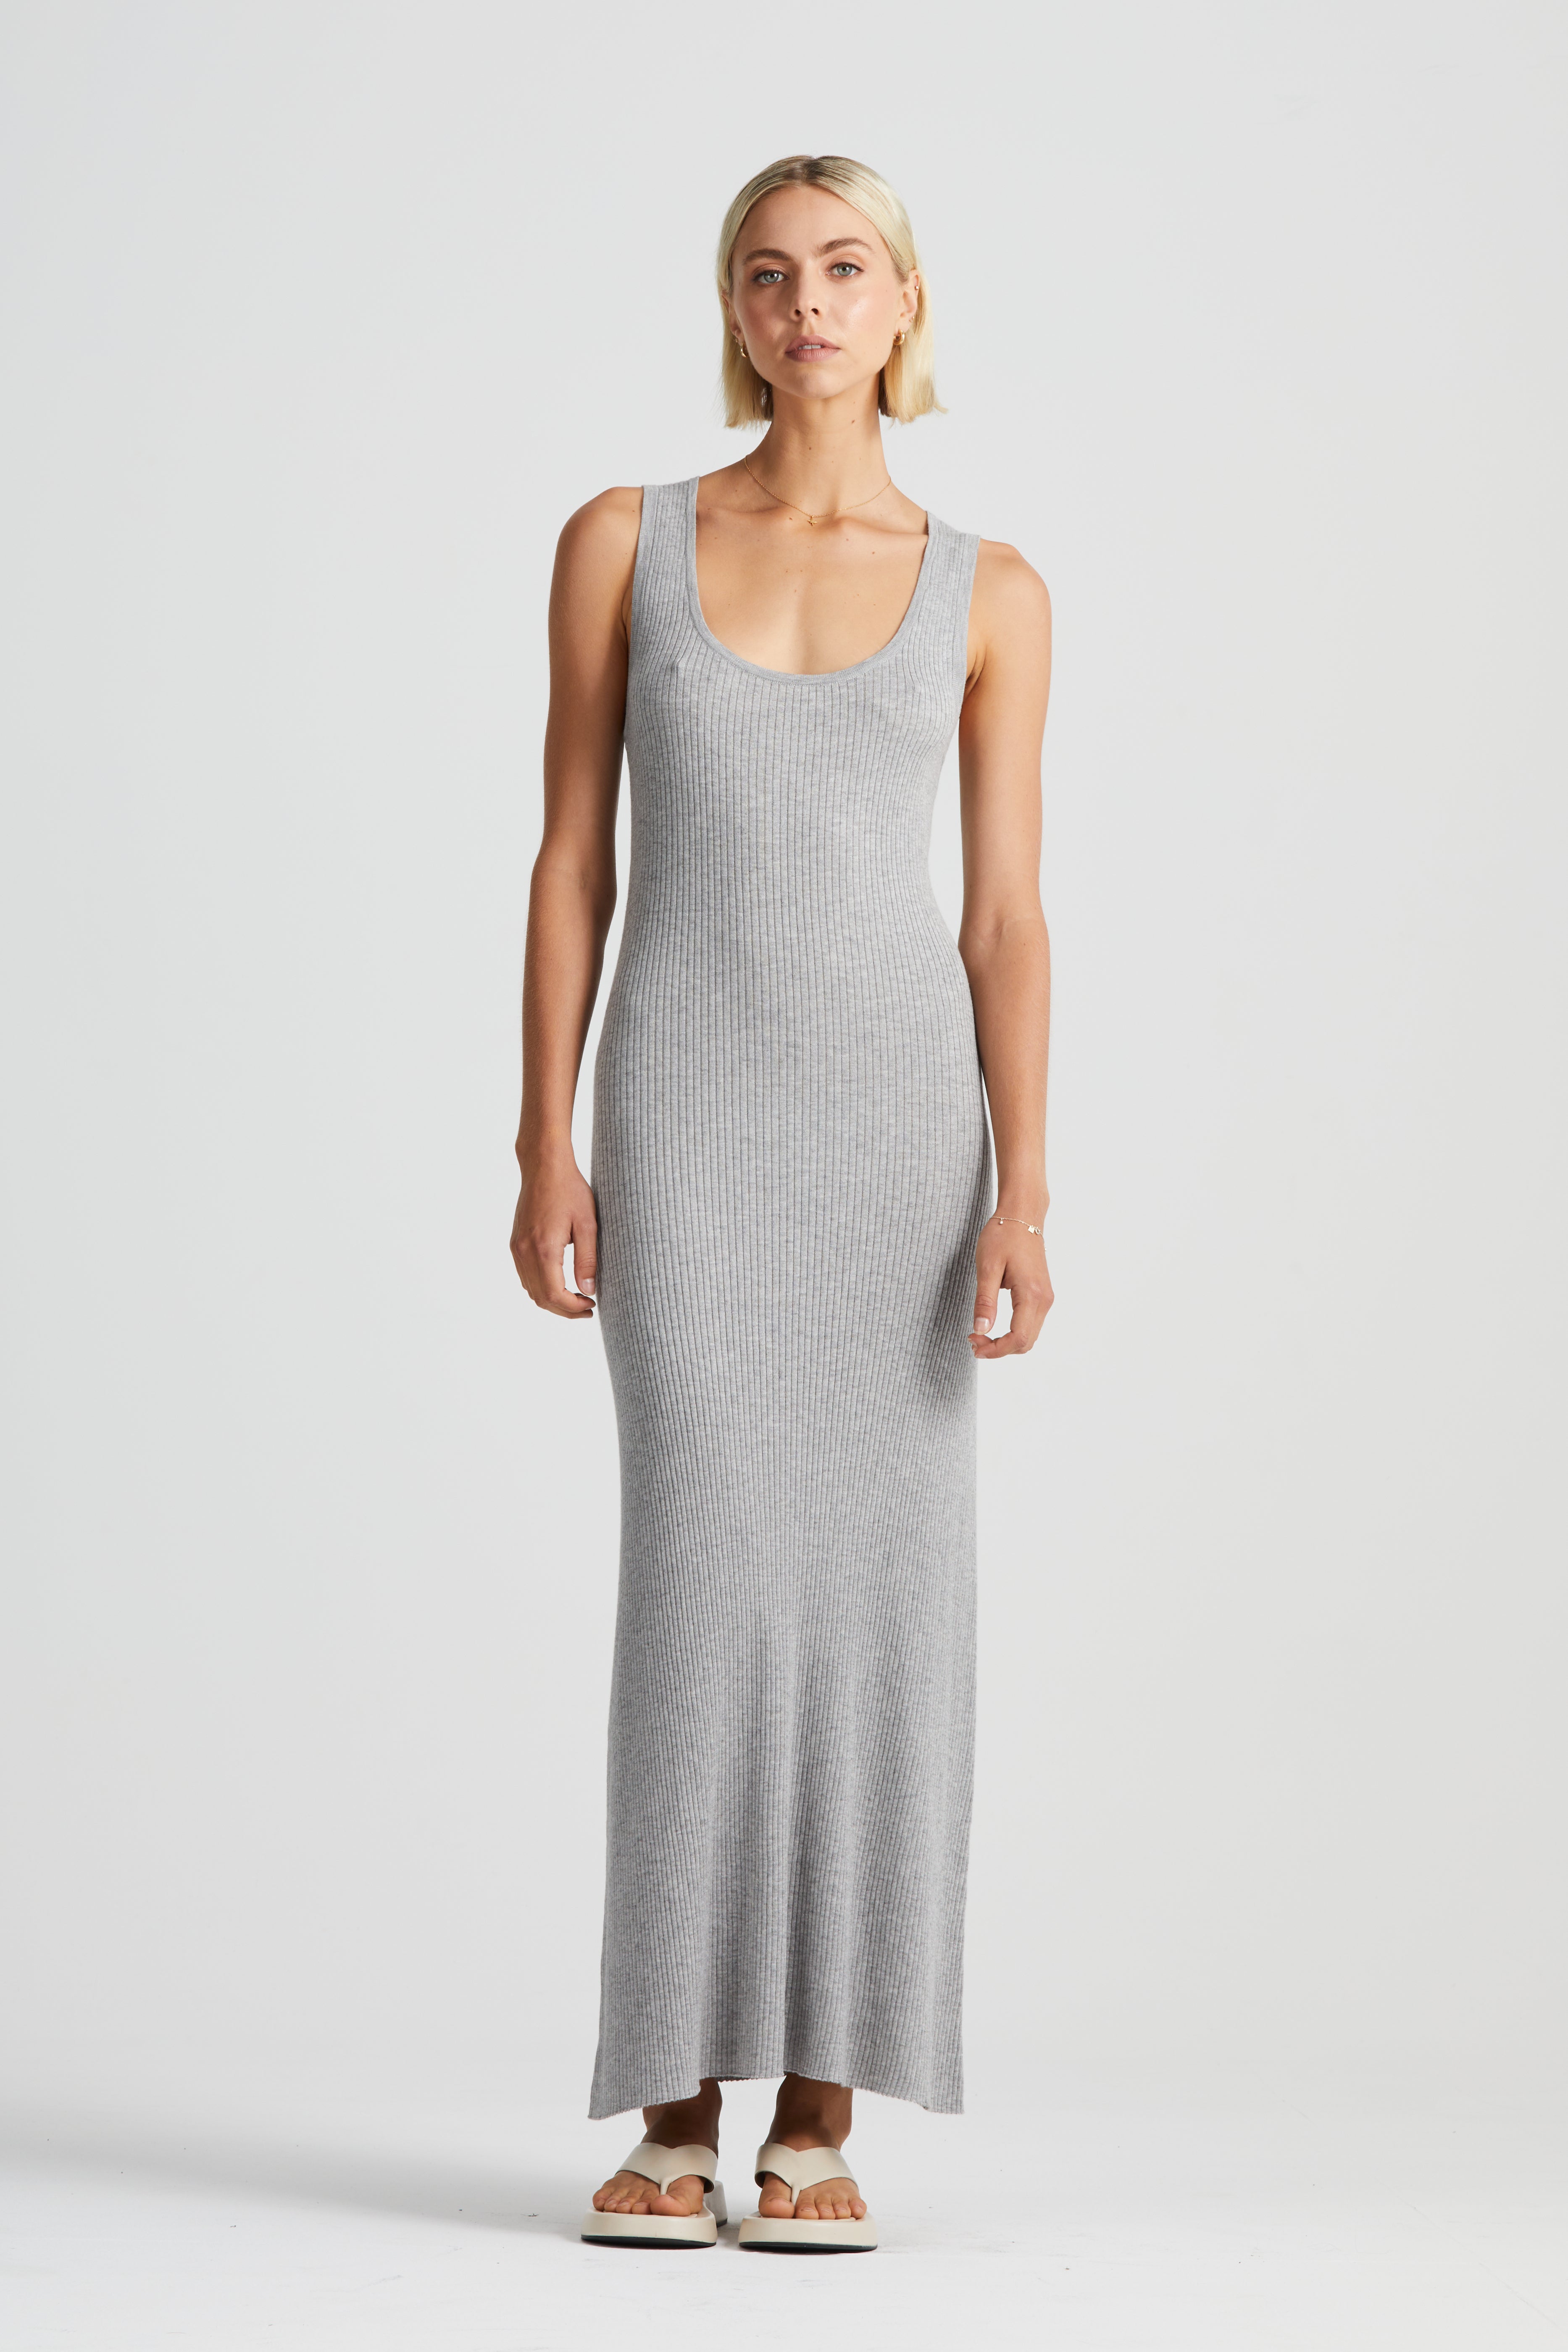 The Linear Sleeveless Knit Dress | Grey $360